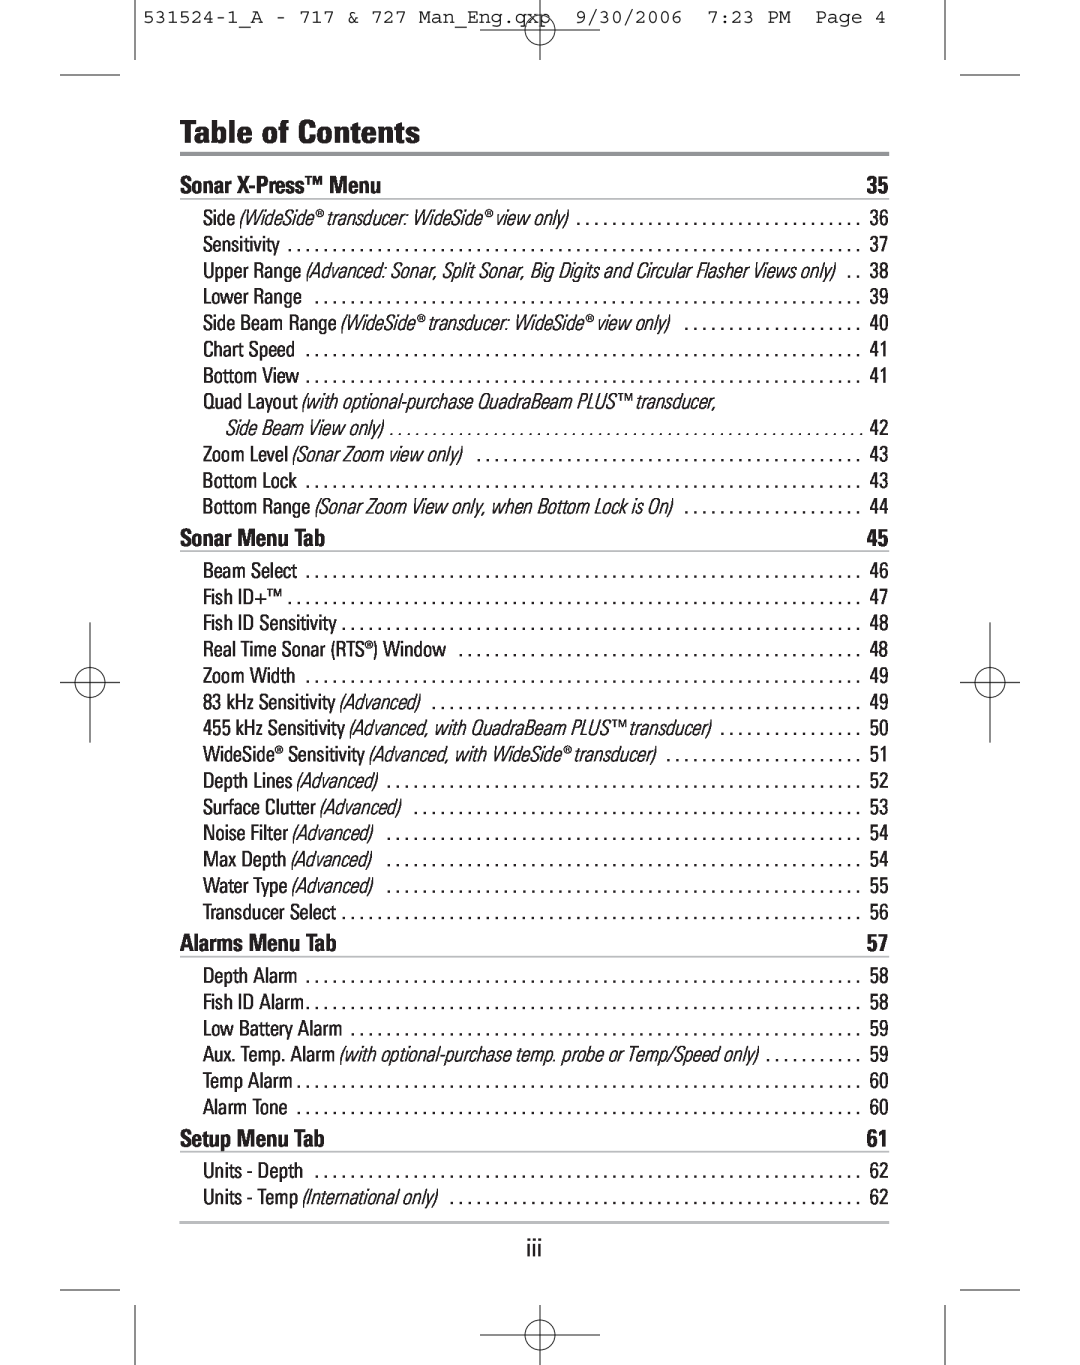 Humminbird 717, 727 manual Table of Contents, Sonar X-Press Menu, Sonar Menu Tab, Alarms Menu Tab, Setup Menu Tab 